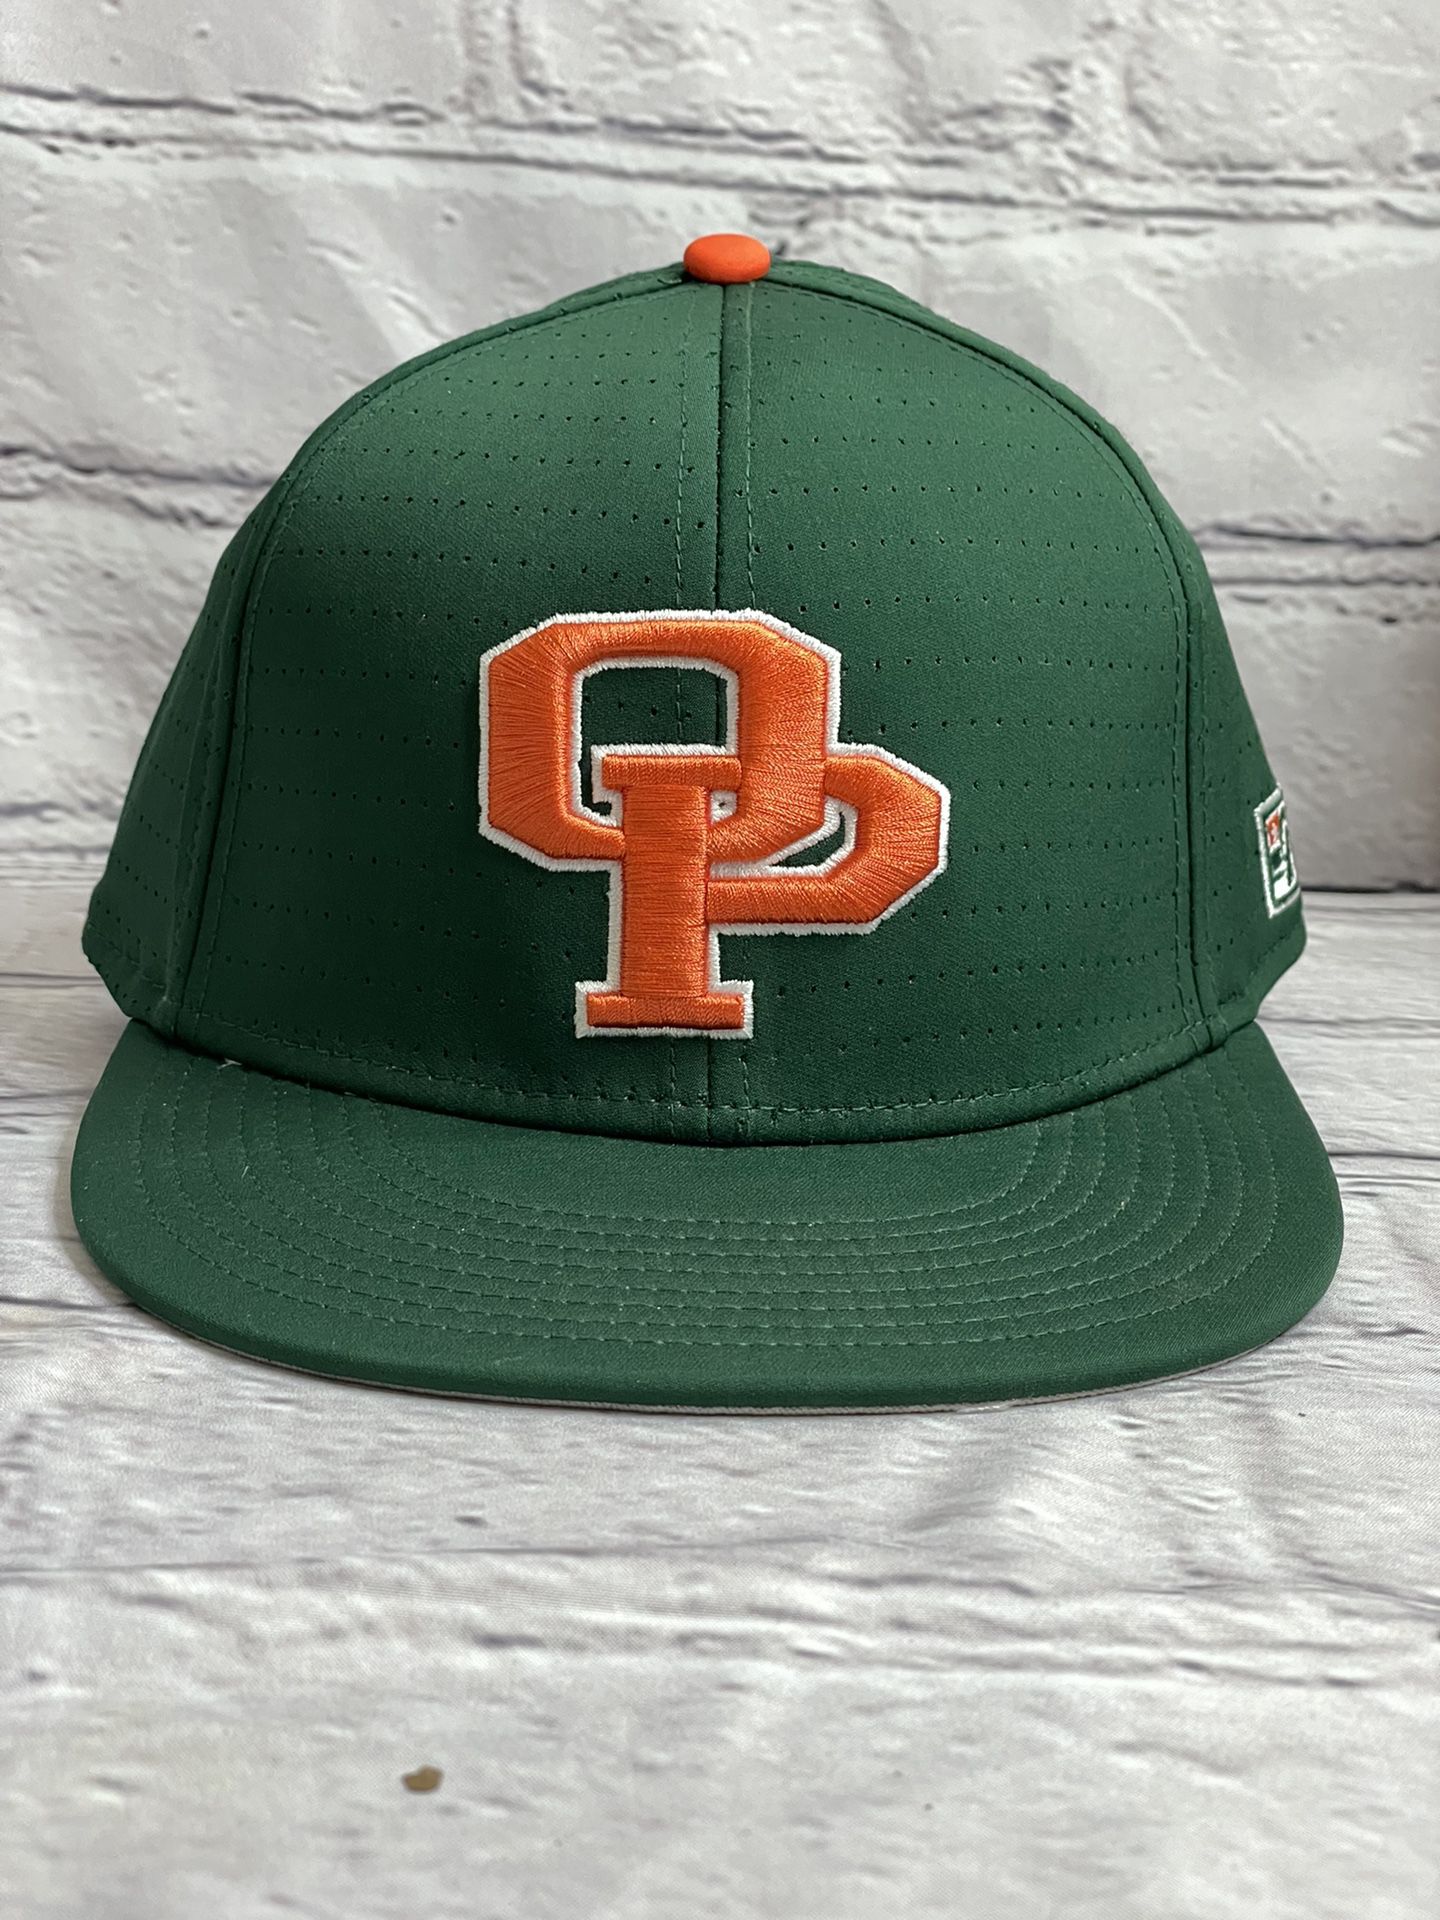 THE GAME Men's Raiders Logo Green Baseball Hat Size 7 1/4 